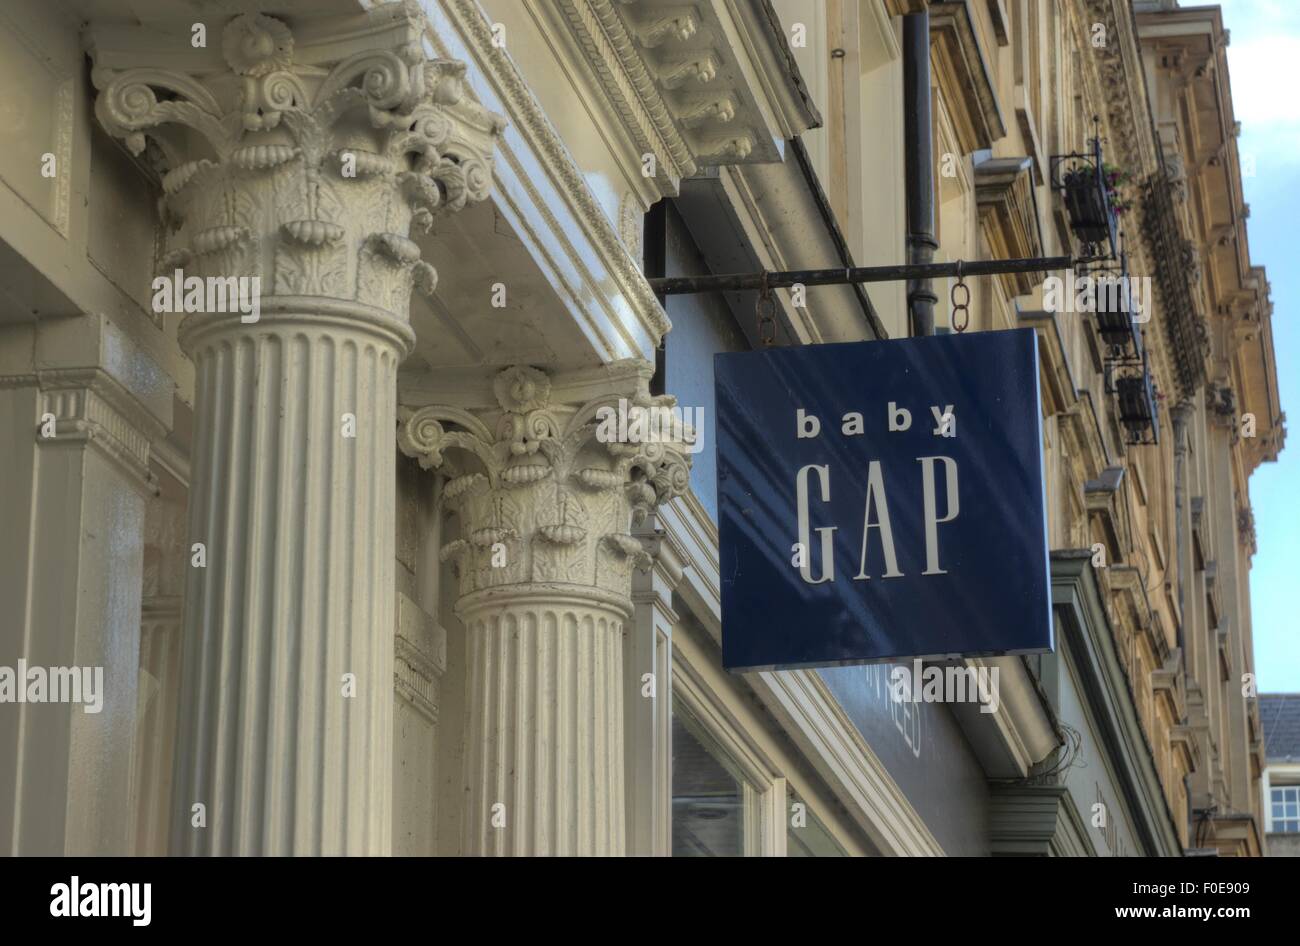 Baby Gap shop Bath Inglaterra Foto de stock